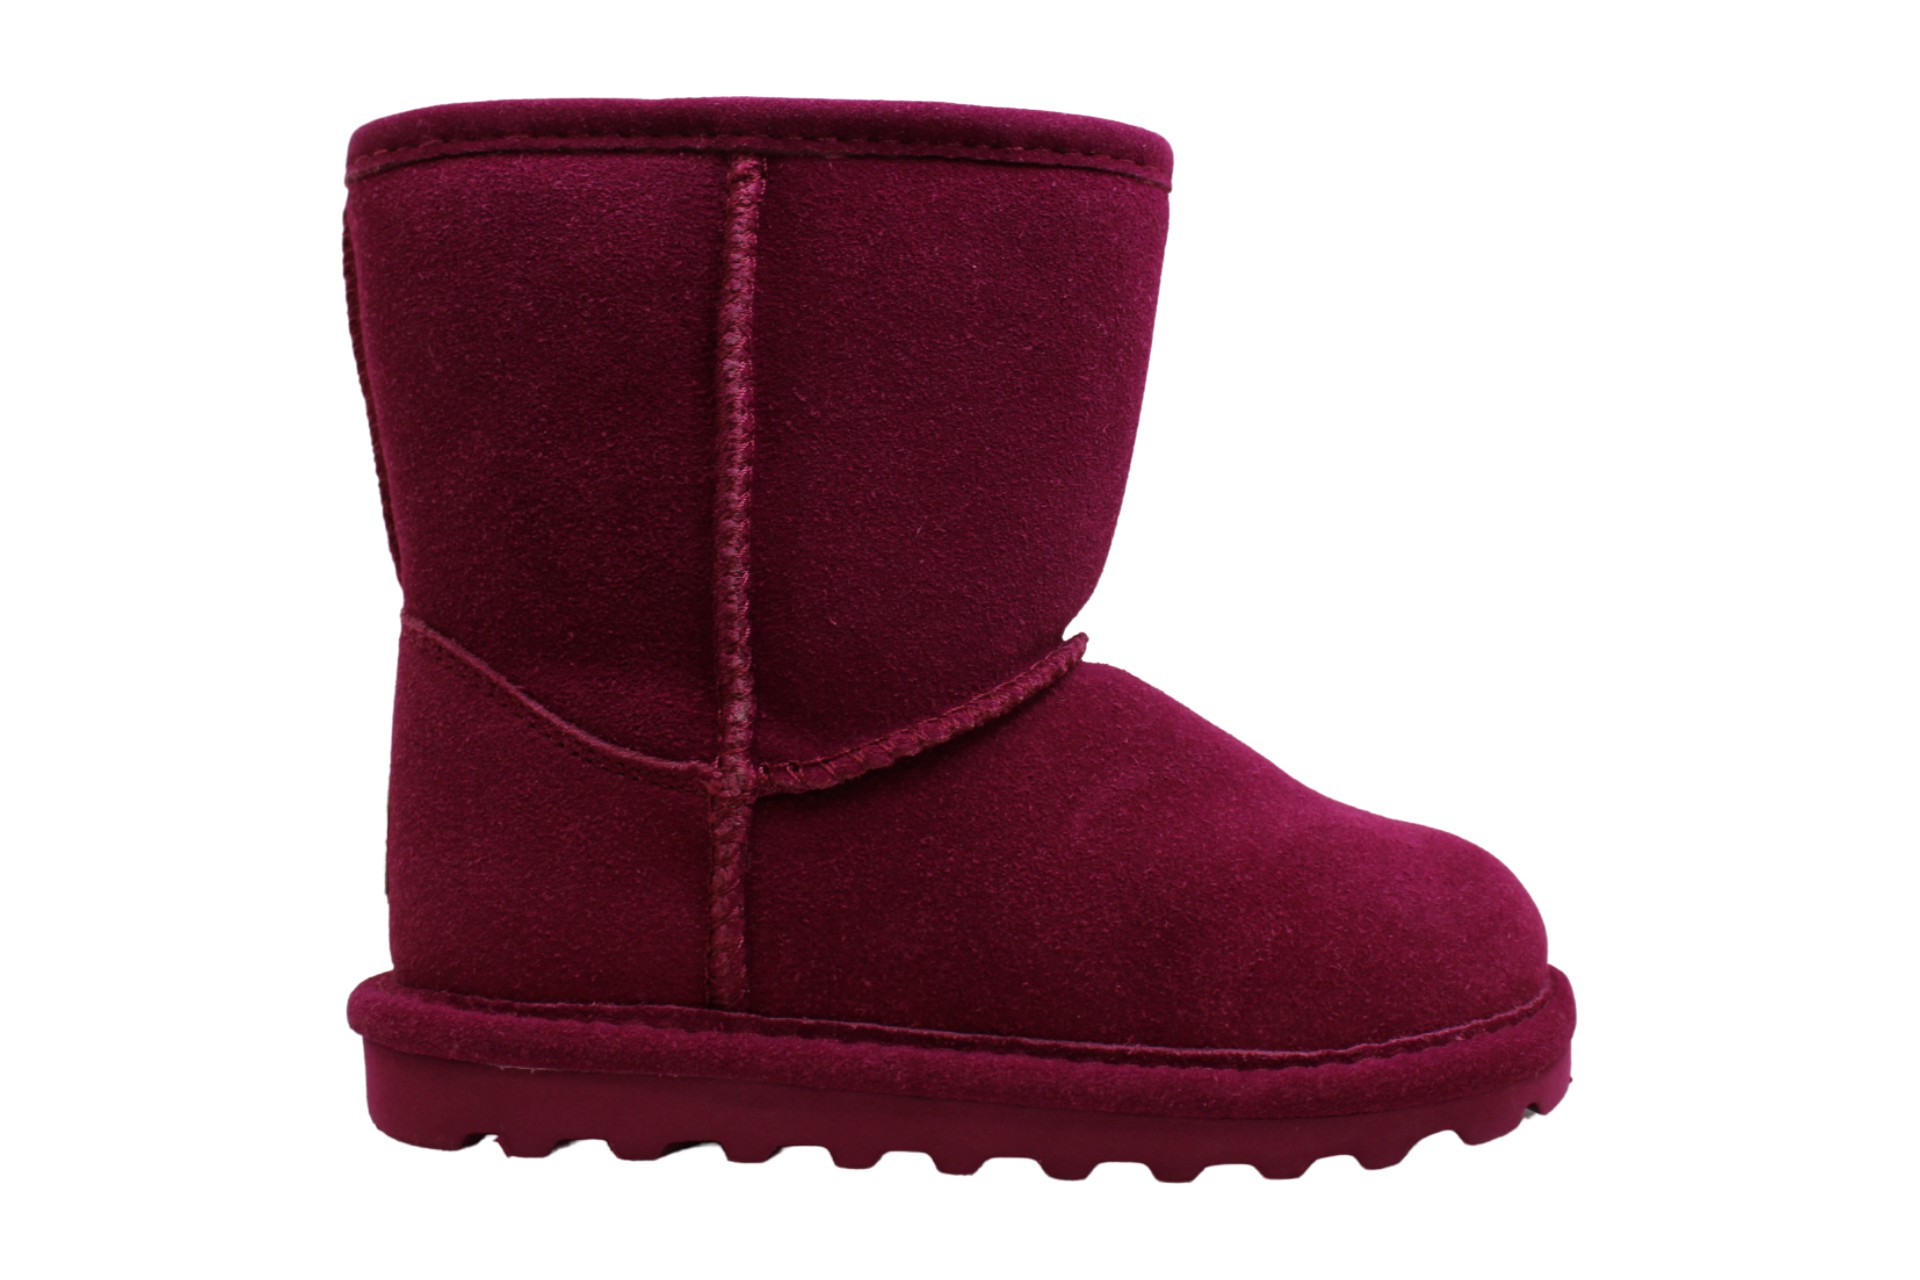 Bearpaw Children Girls Boots in Pink Color, Size 11 ZID | eBay